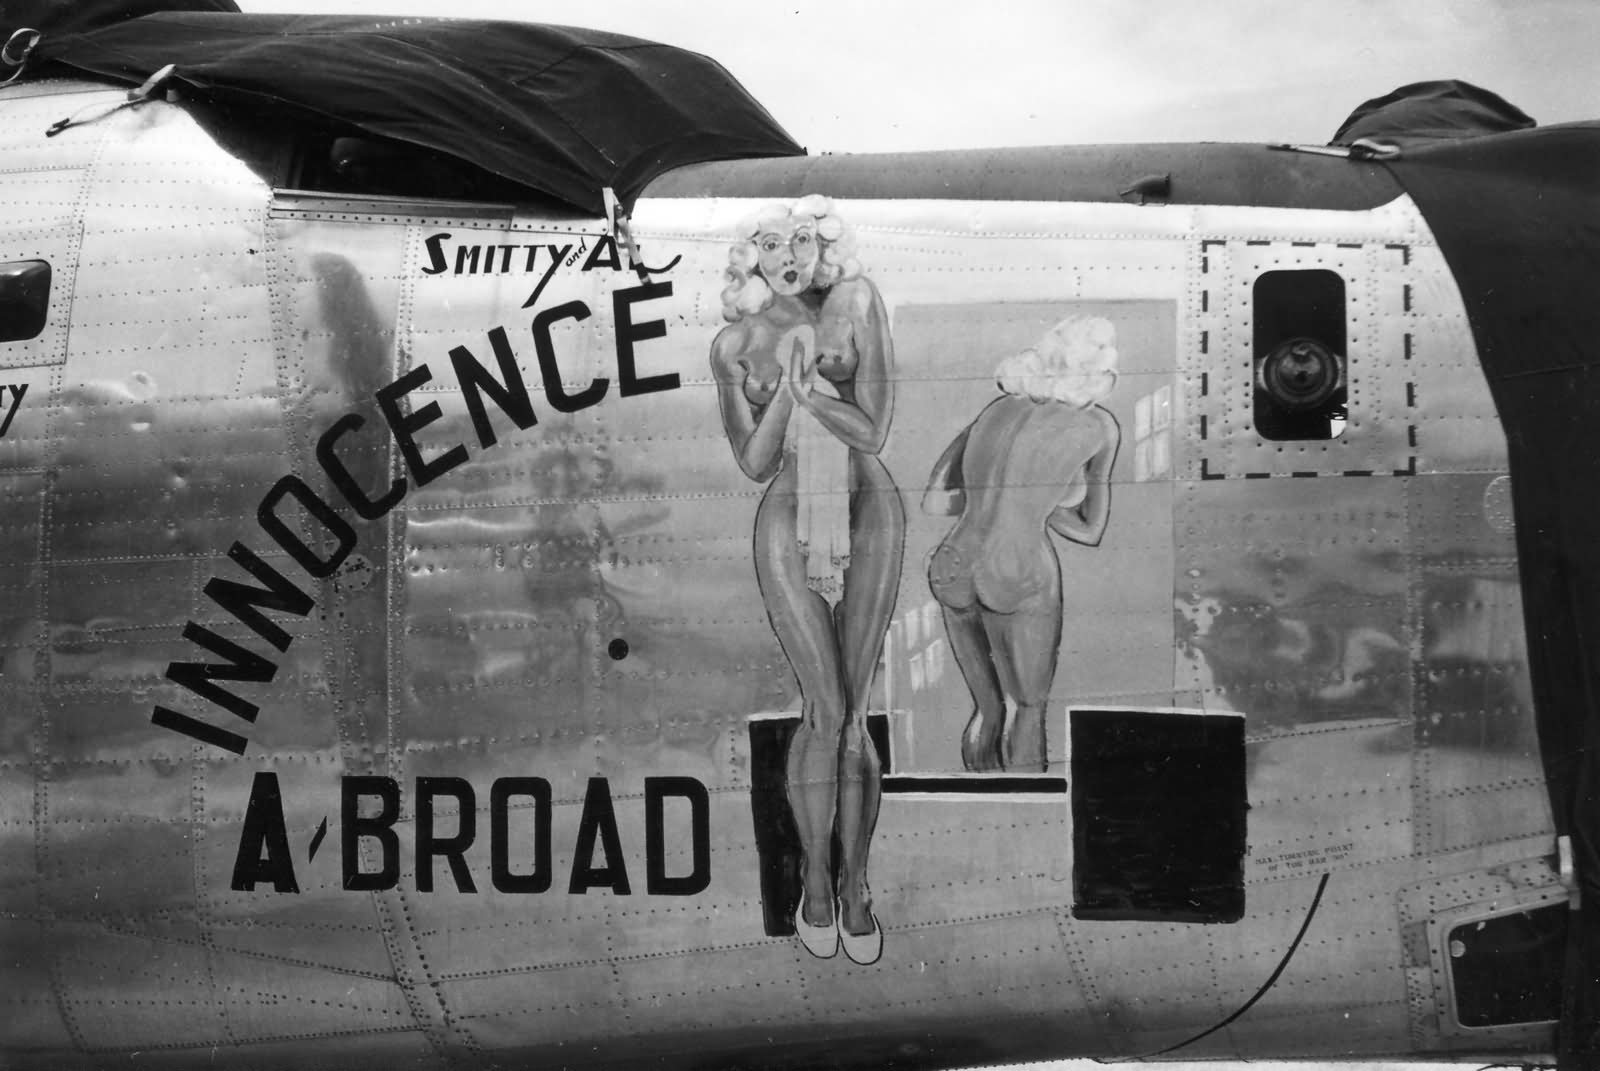 B 24 Liberator Bomber Nose Art 494th Bomb Group Innocence A Broad